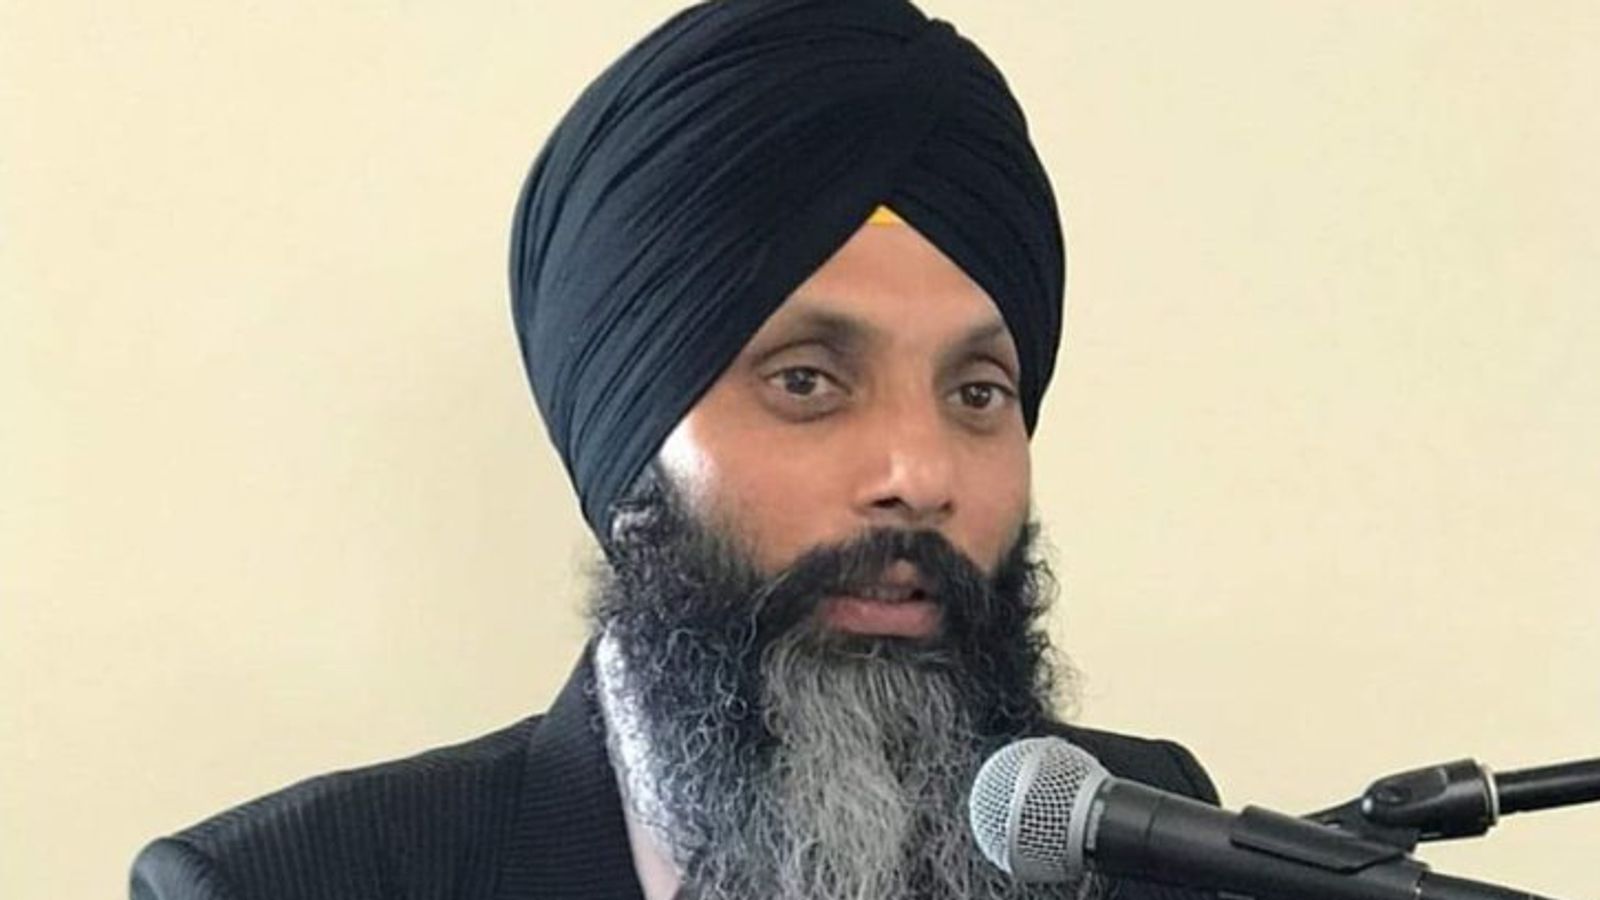 Fourth man charged with murder of Sikh separatist leader Hardeep Singh Nijjar in Canada